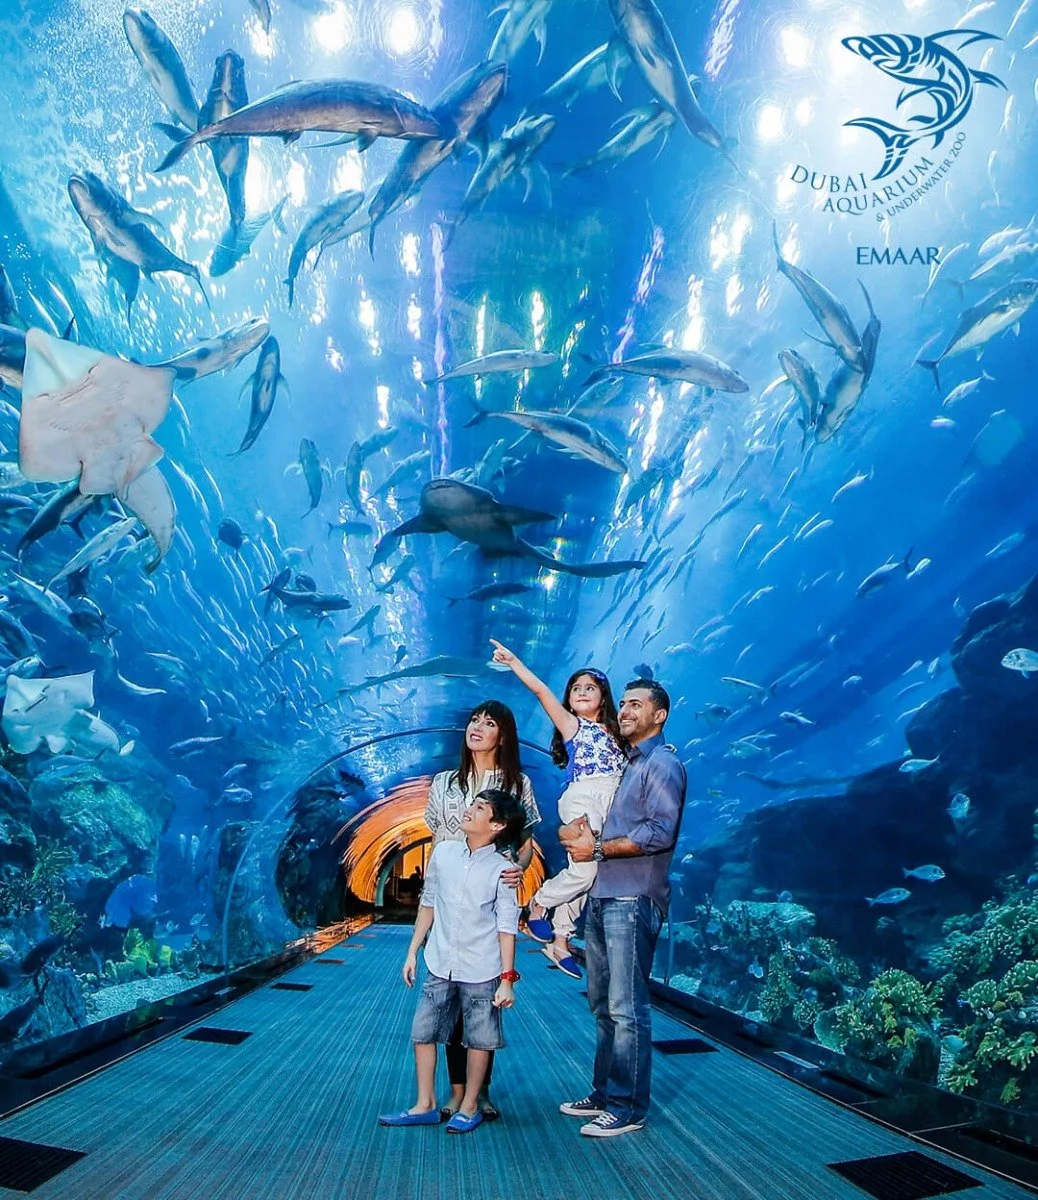 Dubai Aquarium & Aqua Nursery